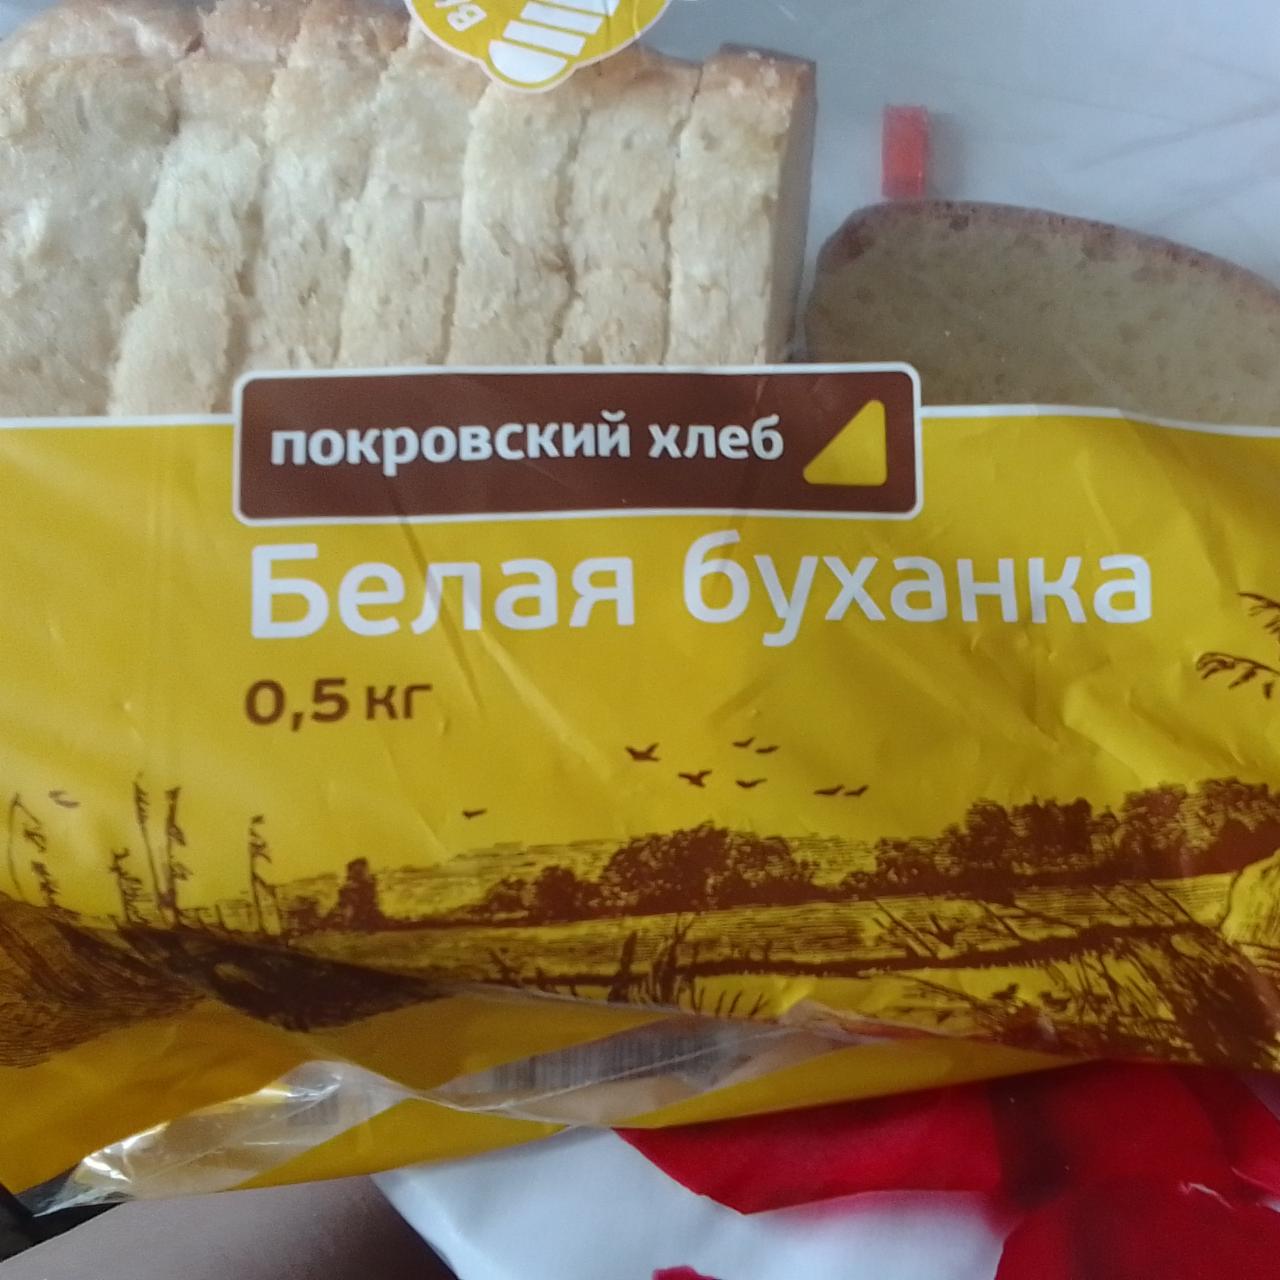 Фото - Белая буханка Покровский хлеб